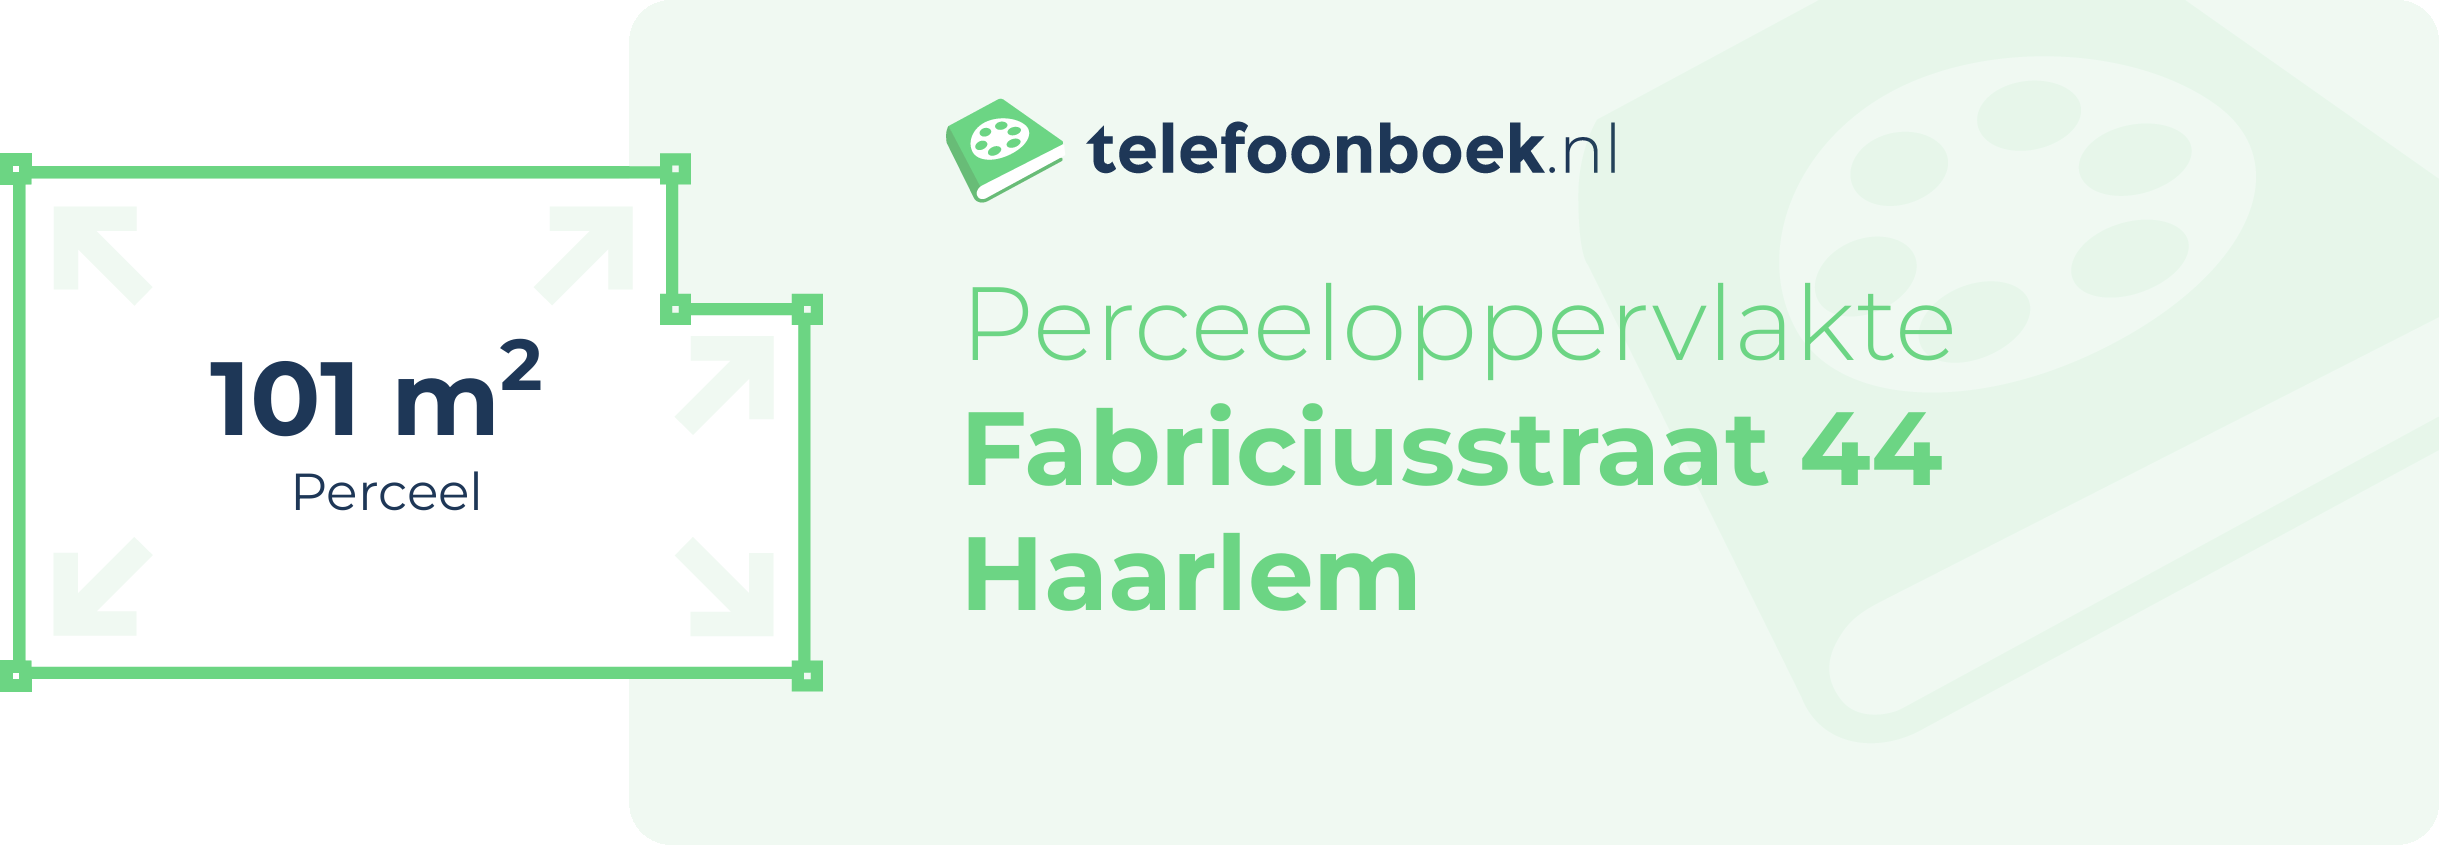 Perceeloppervlakte Fabriciusstraat 44 Haarlem